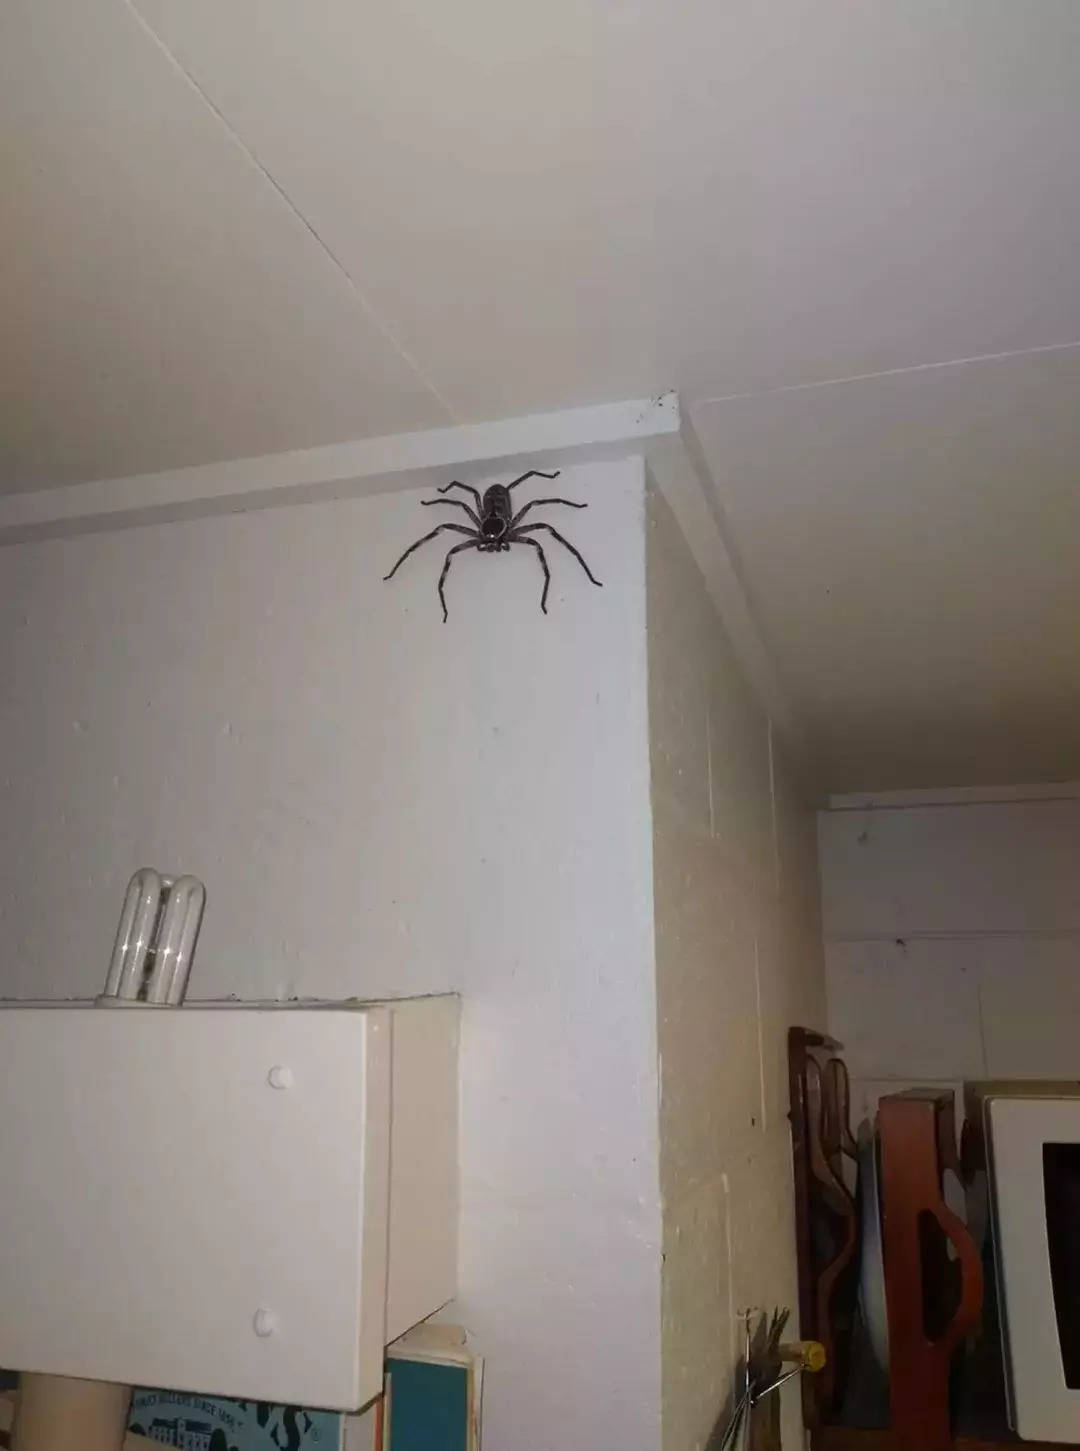 giant australian huntsman spider